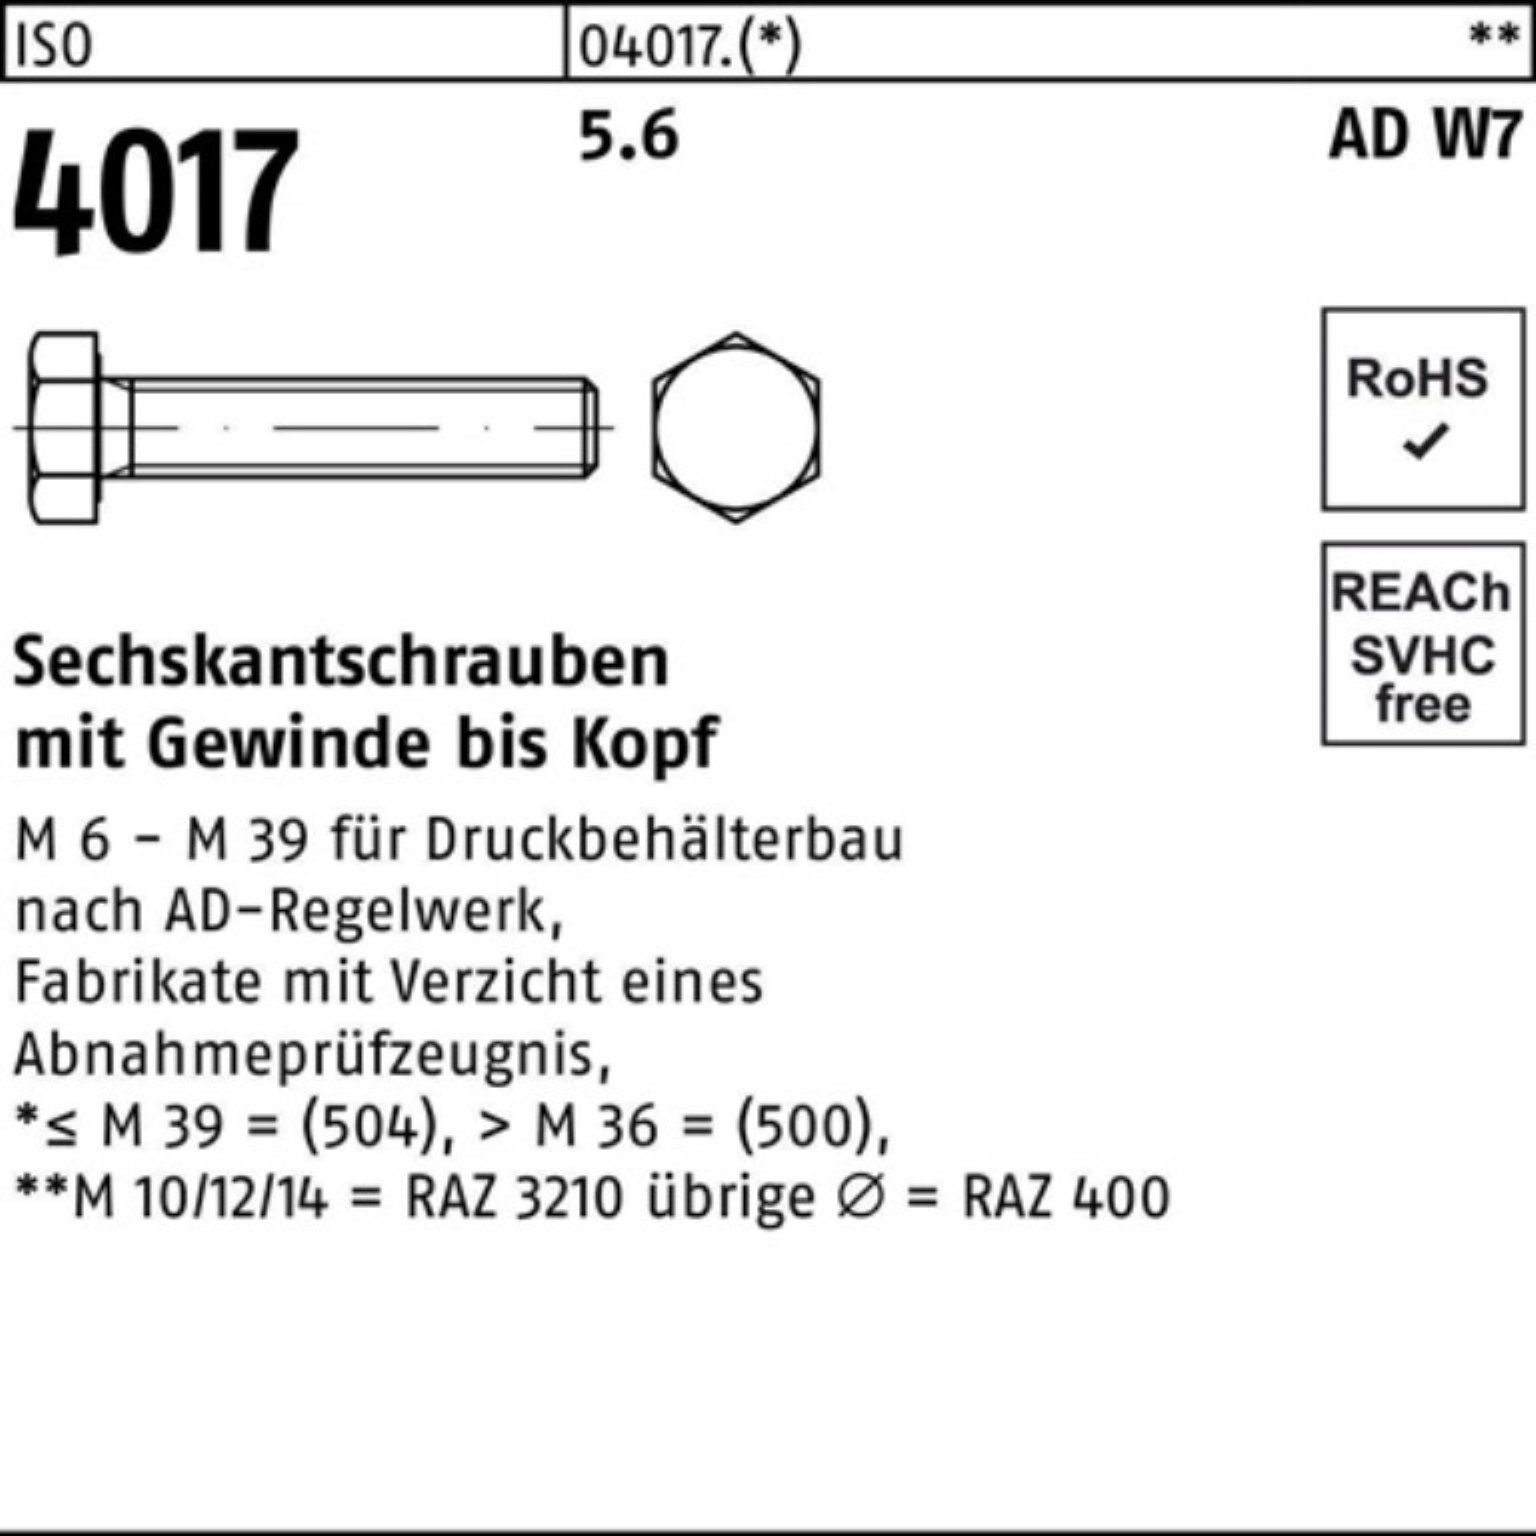 Bufab Sechskantschraube 100er Pack Sechskantschraube ISO 4017 VG M12x 55 5.6 AD W7 100 Stück